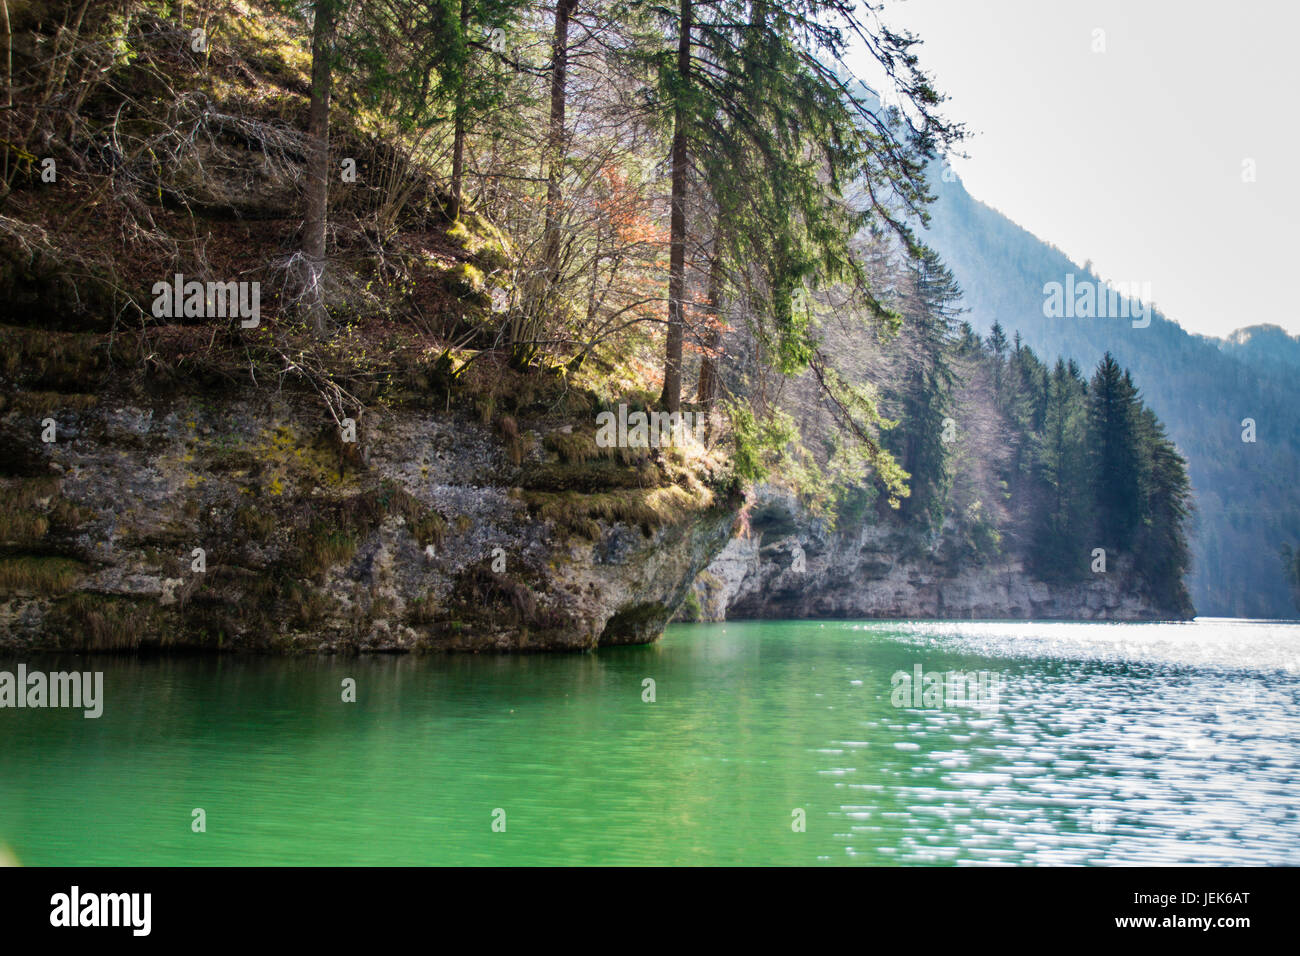 Klauser reservoir, Upper Austria, Europe Stock Photo